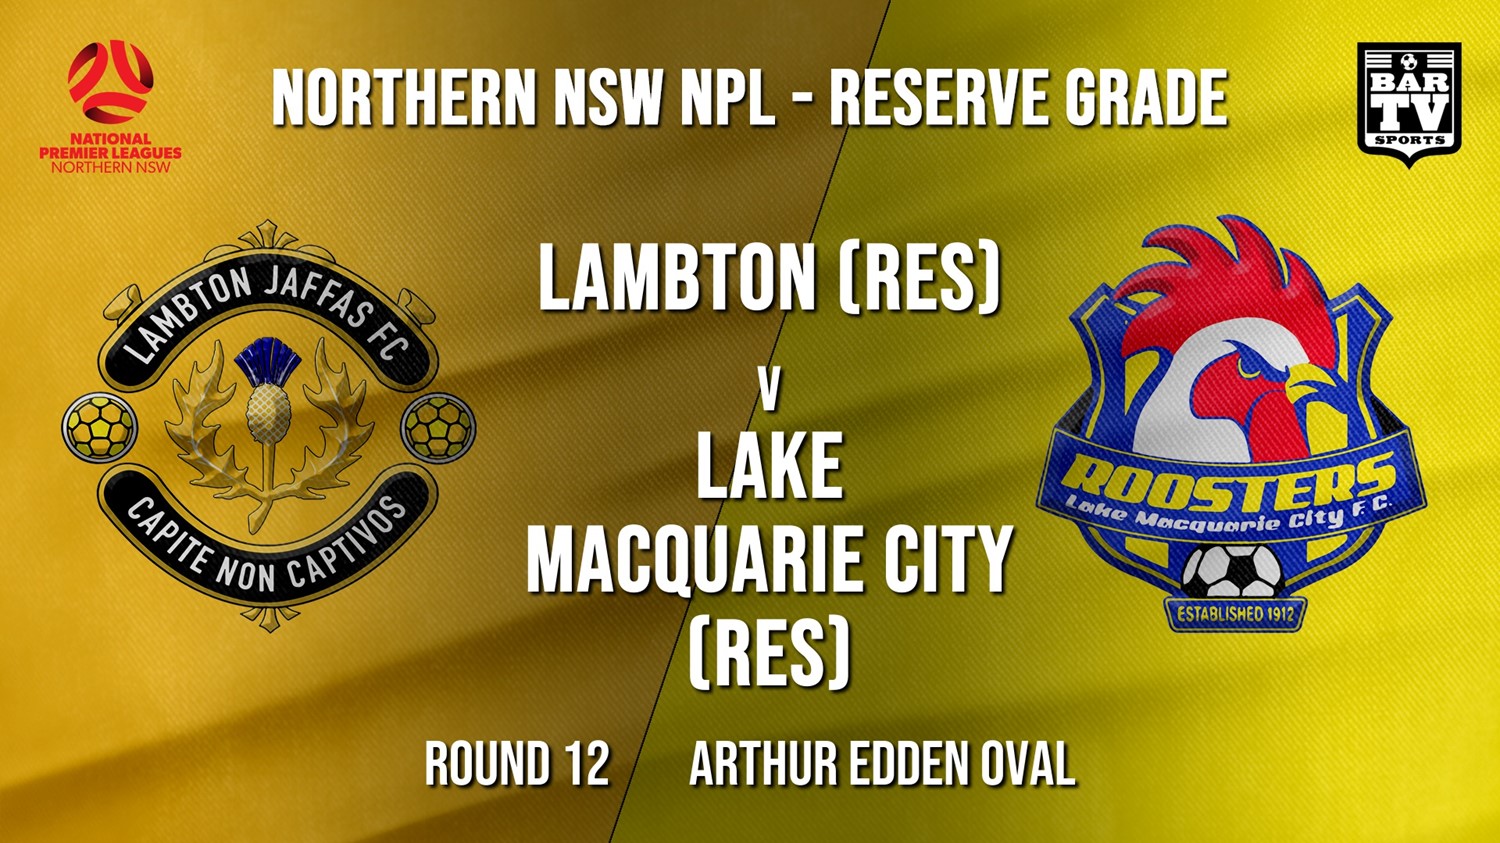 NPL NNSW RES Round 12 - Lambton Jaffas FC (Res) v Lake Macquarie City FC (Res) Minigame Slate Image